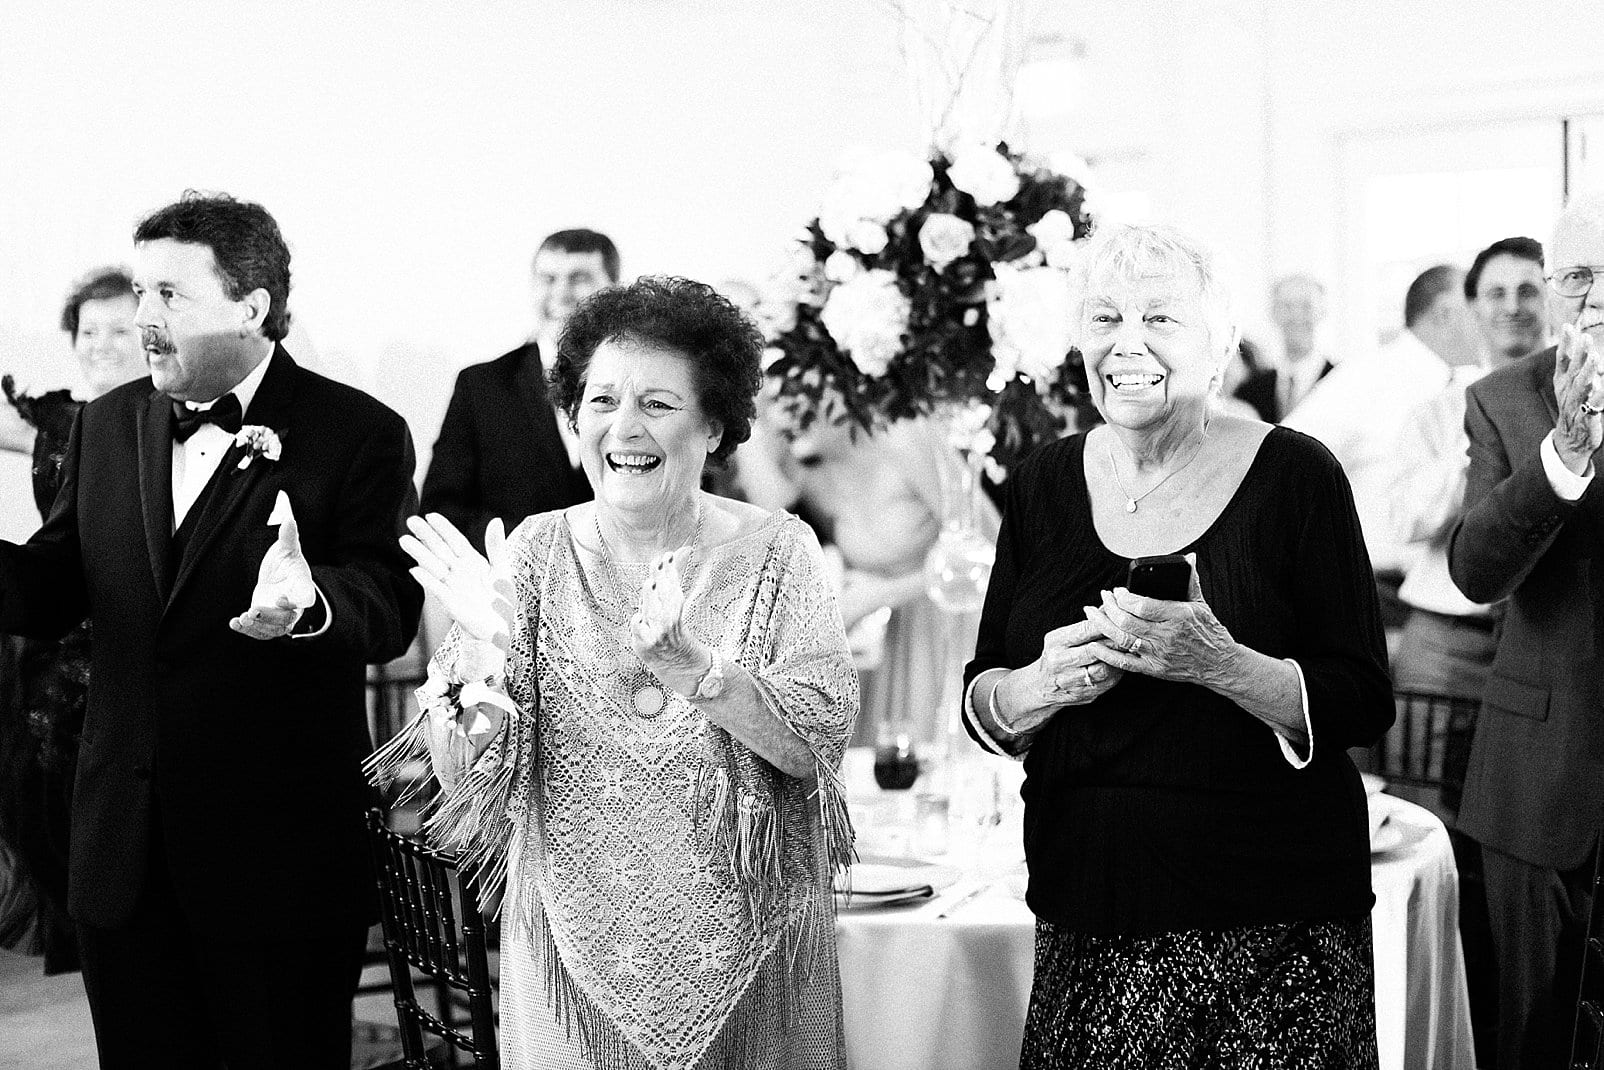 raleigh, nc grandparents at wedding reception photo